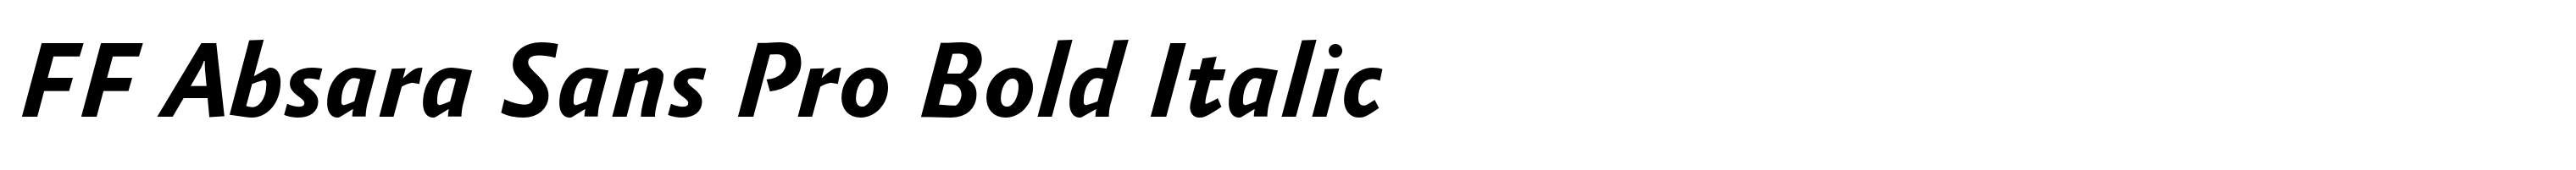 FF Absara Sans Pro Bold Italic